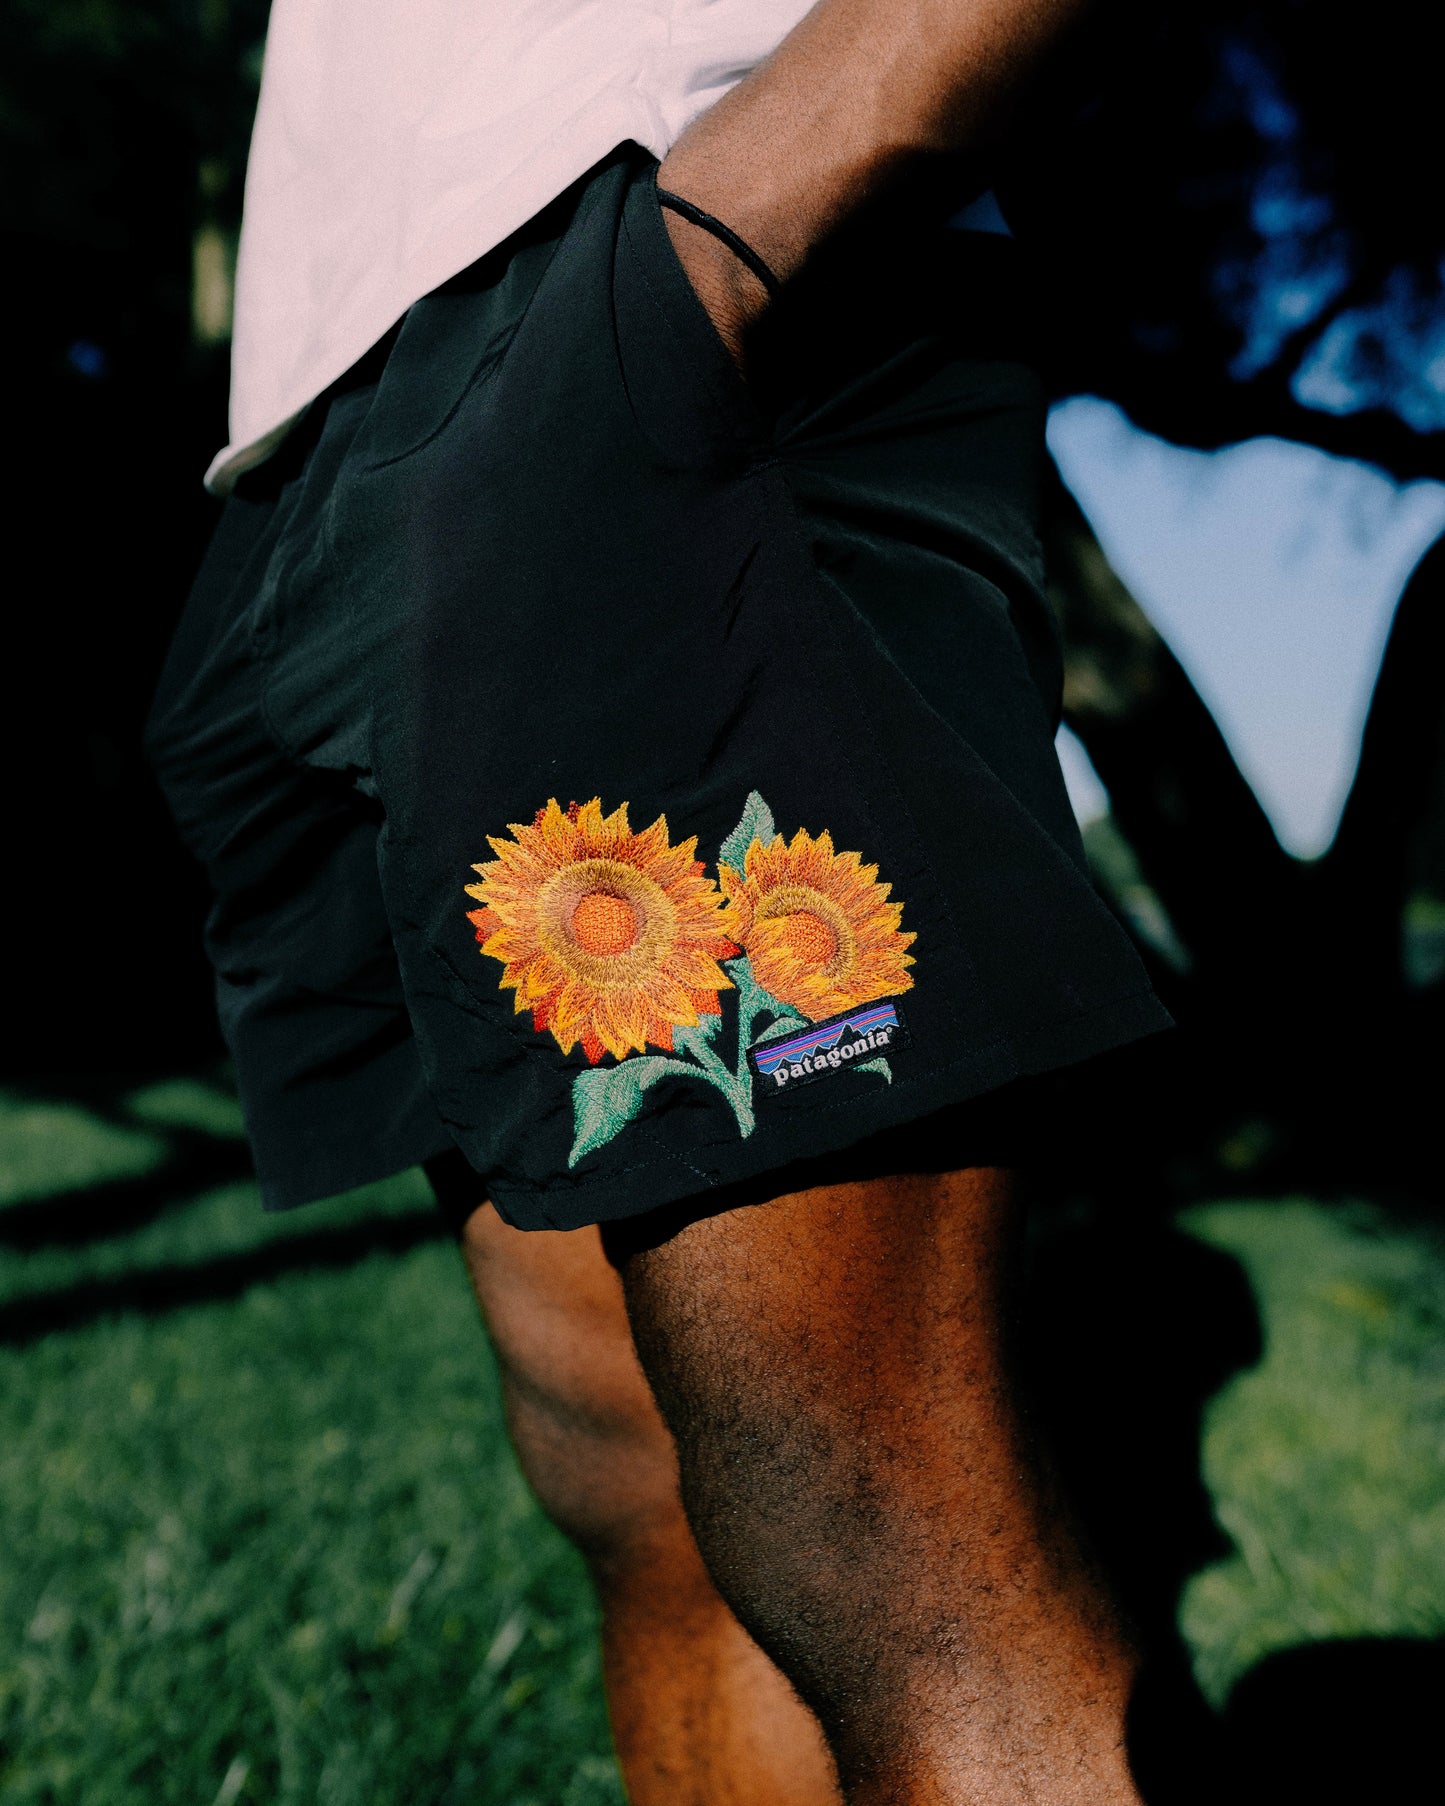 Patagonia Sunflower Shorts